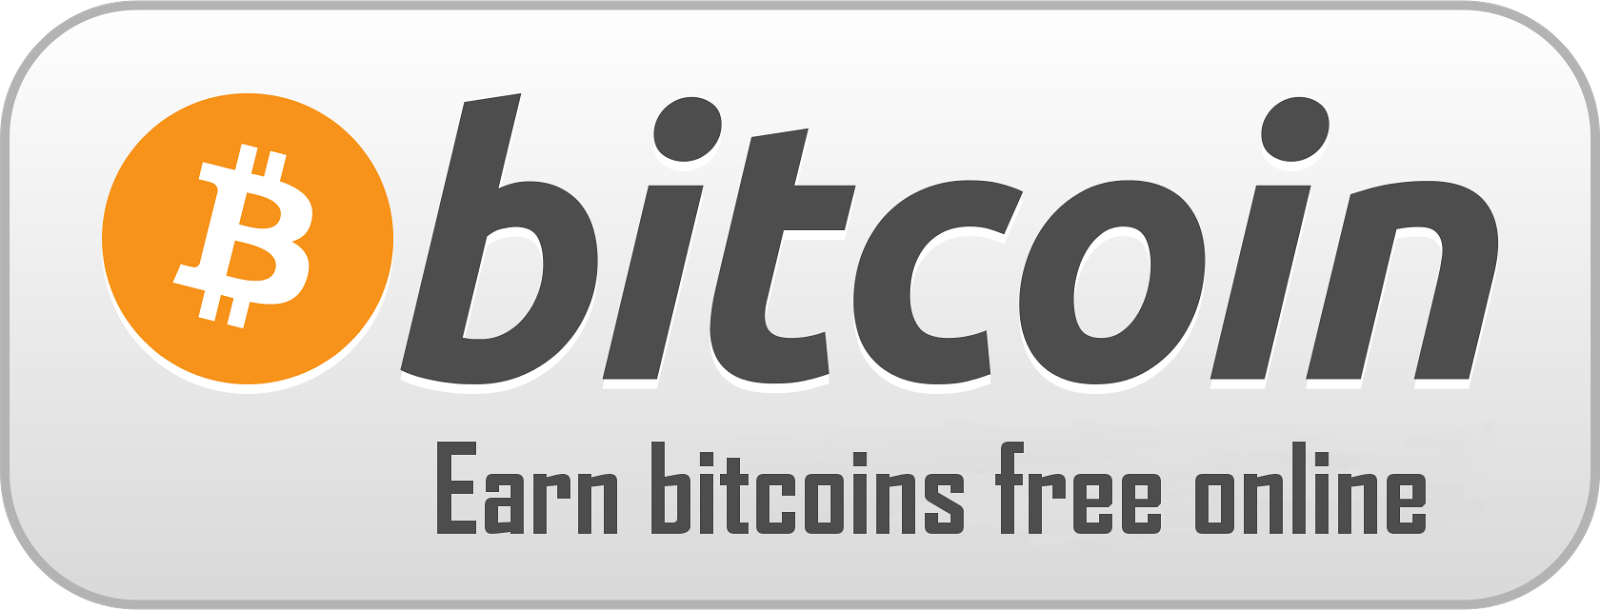 How to earn free bitcoins quora - Satoshi bitcoin wallet ...